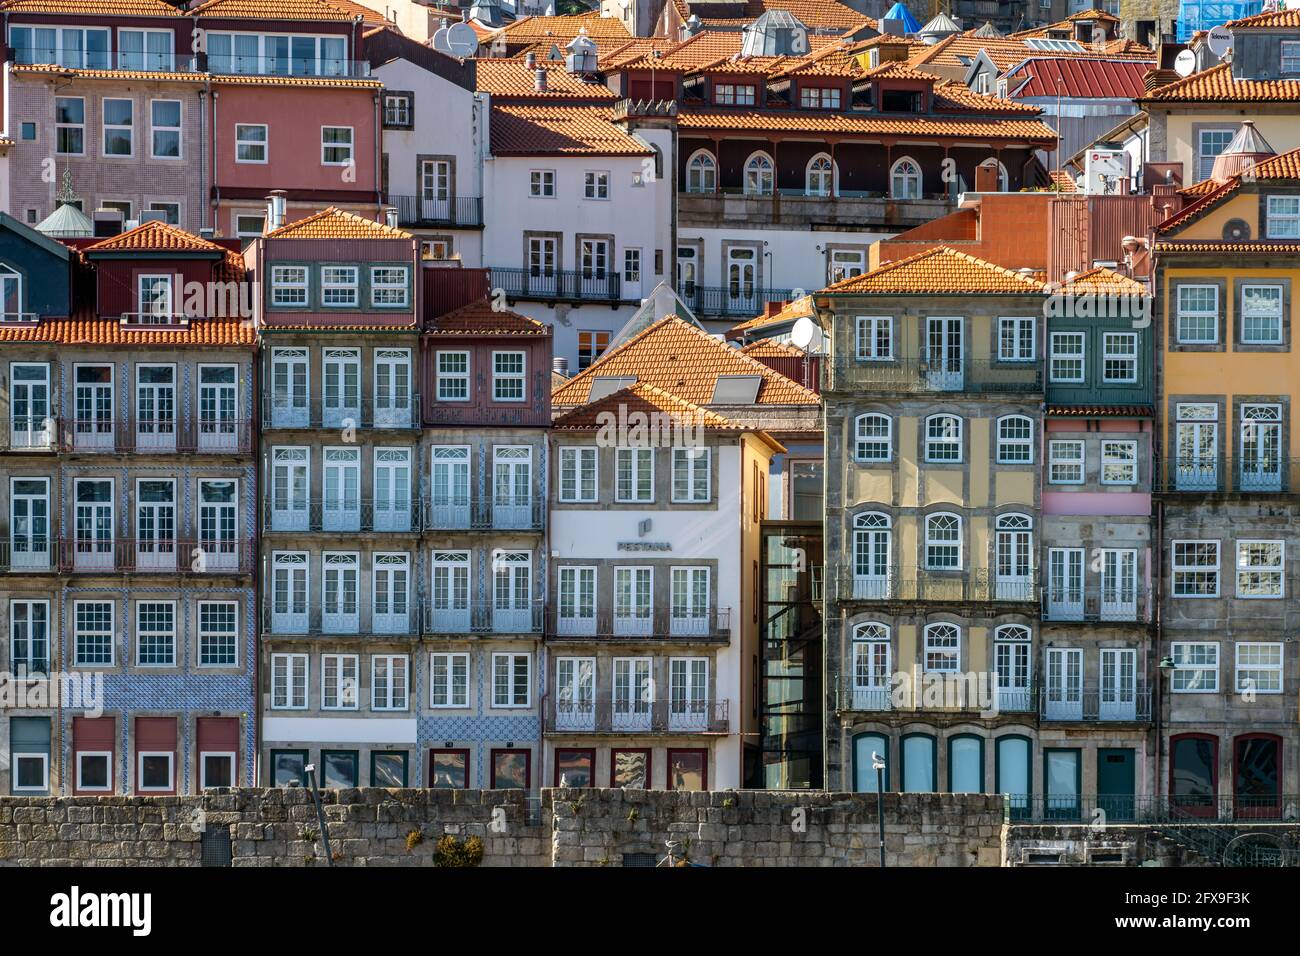 Typische Häuser in der Altstadt von Porto, Portugal, Europa   |  typical homes of the historic old town of Porto, Portugal, Europe Stock Photo